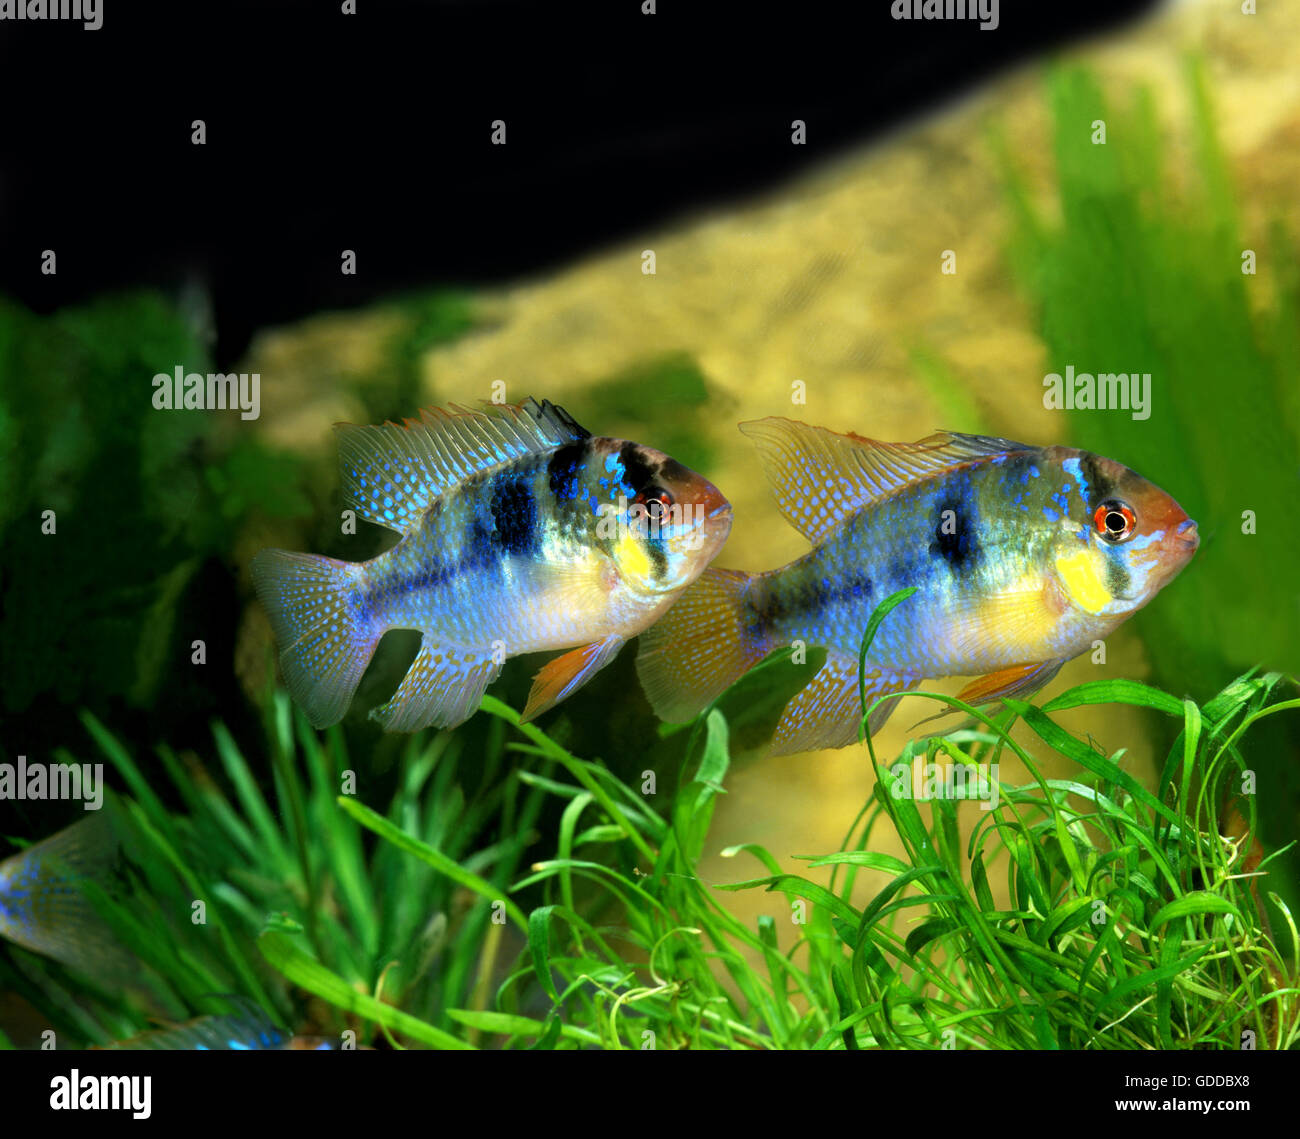 Blue German Ram, mikrogeophagus ramirezi, Aquarium Fishes Stock Photo